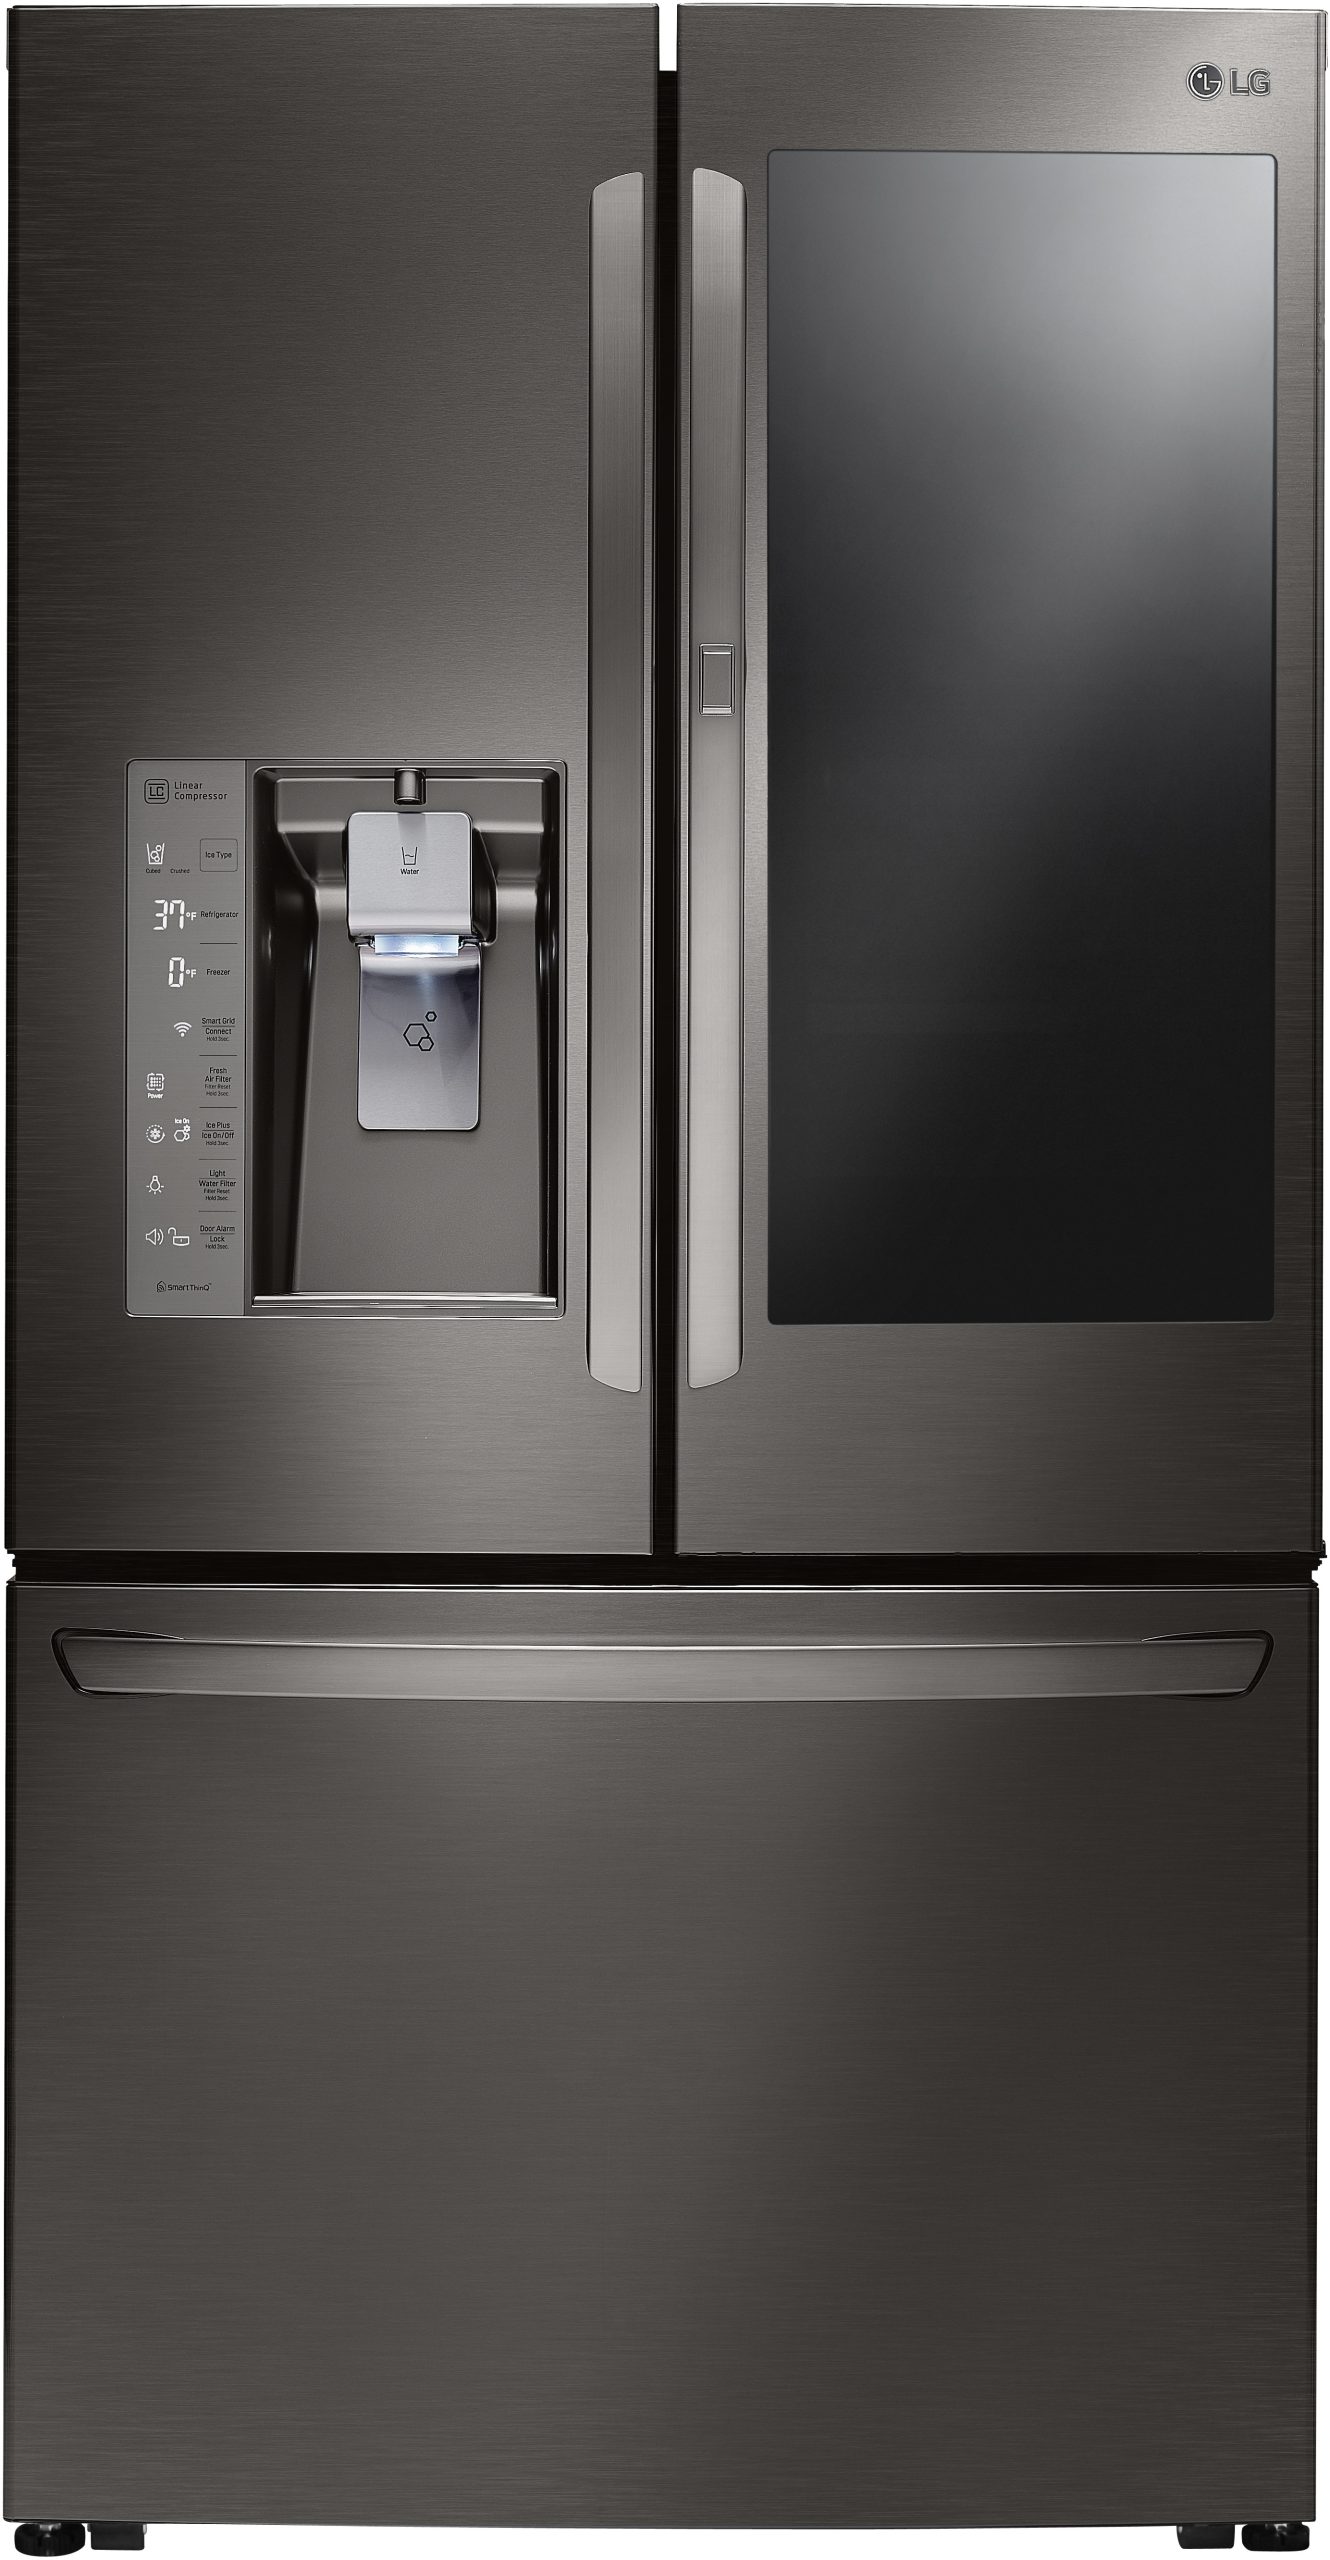 Lg Refrigerator Freezer Drawer Problems Troubleshooting Tips+